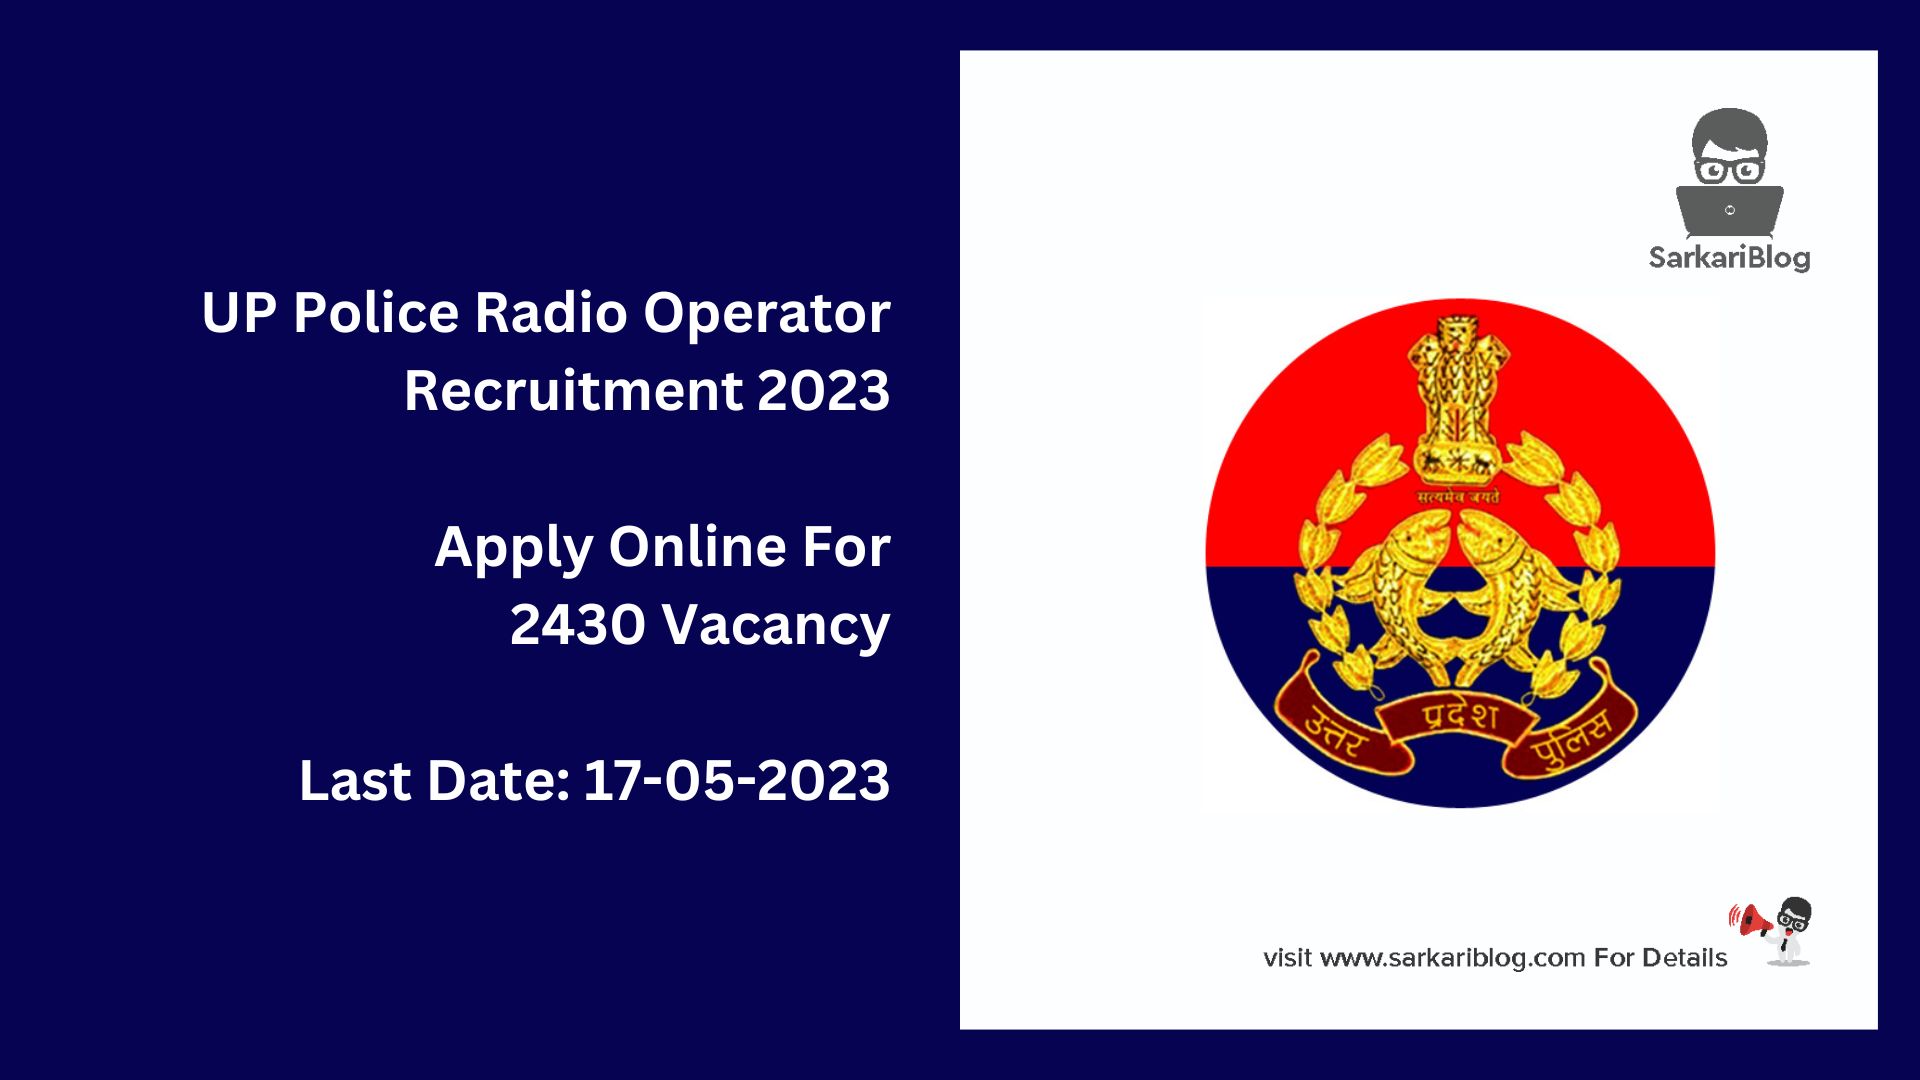 UP Police Radio Operator Recruitment 2023